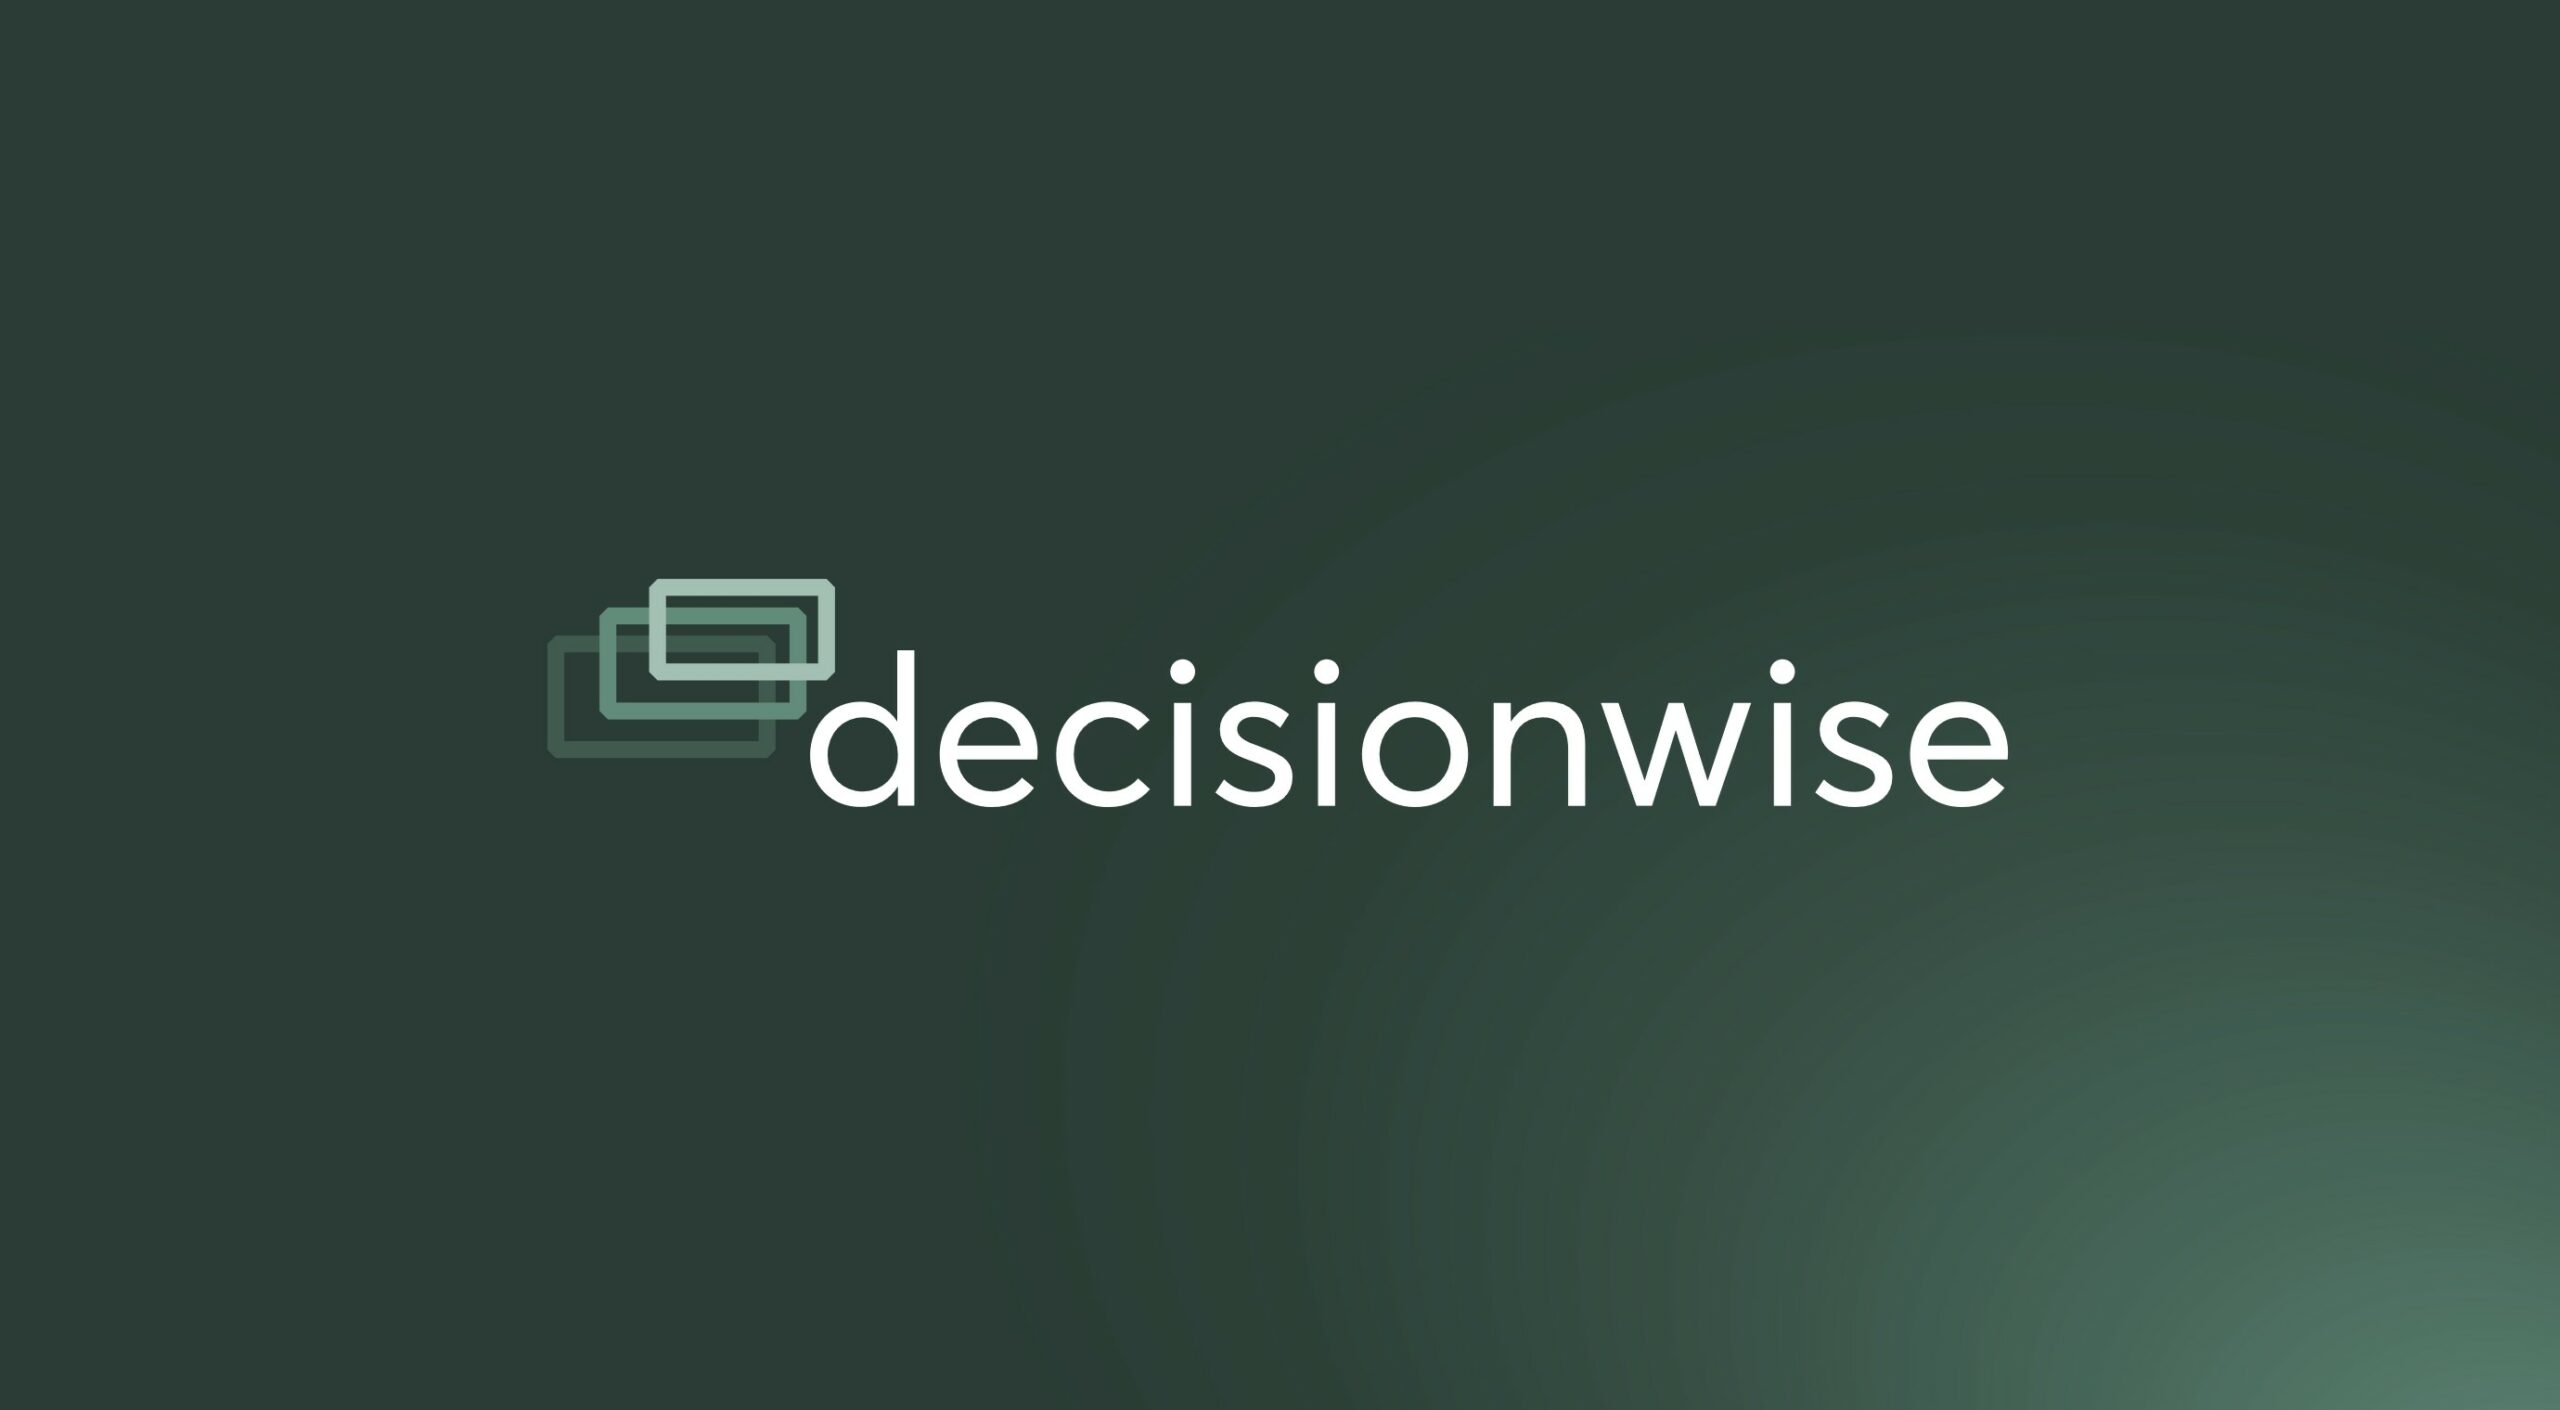 DecisionWise Logo